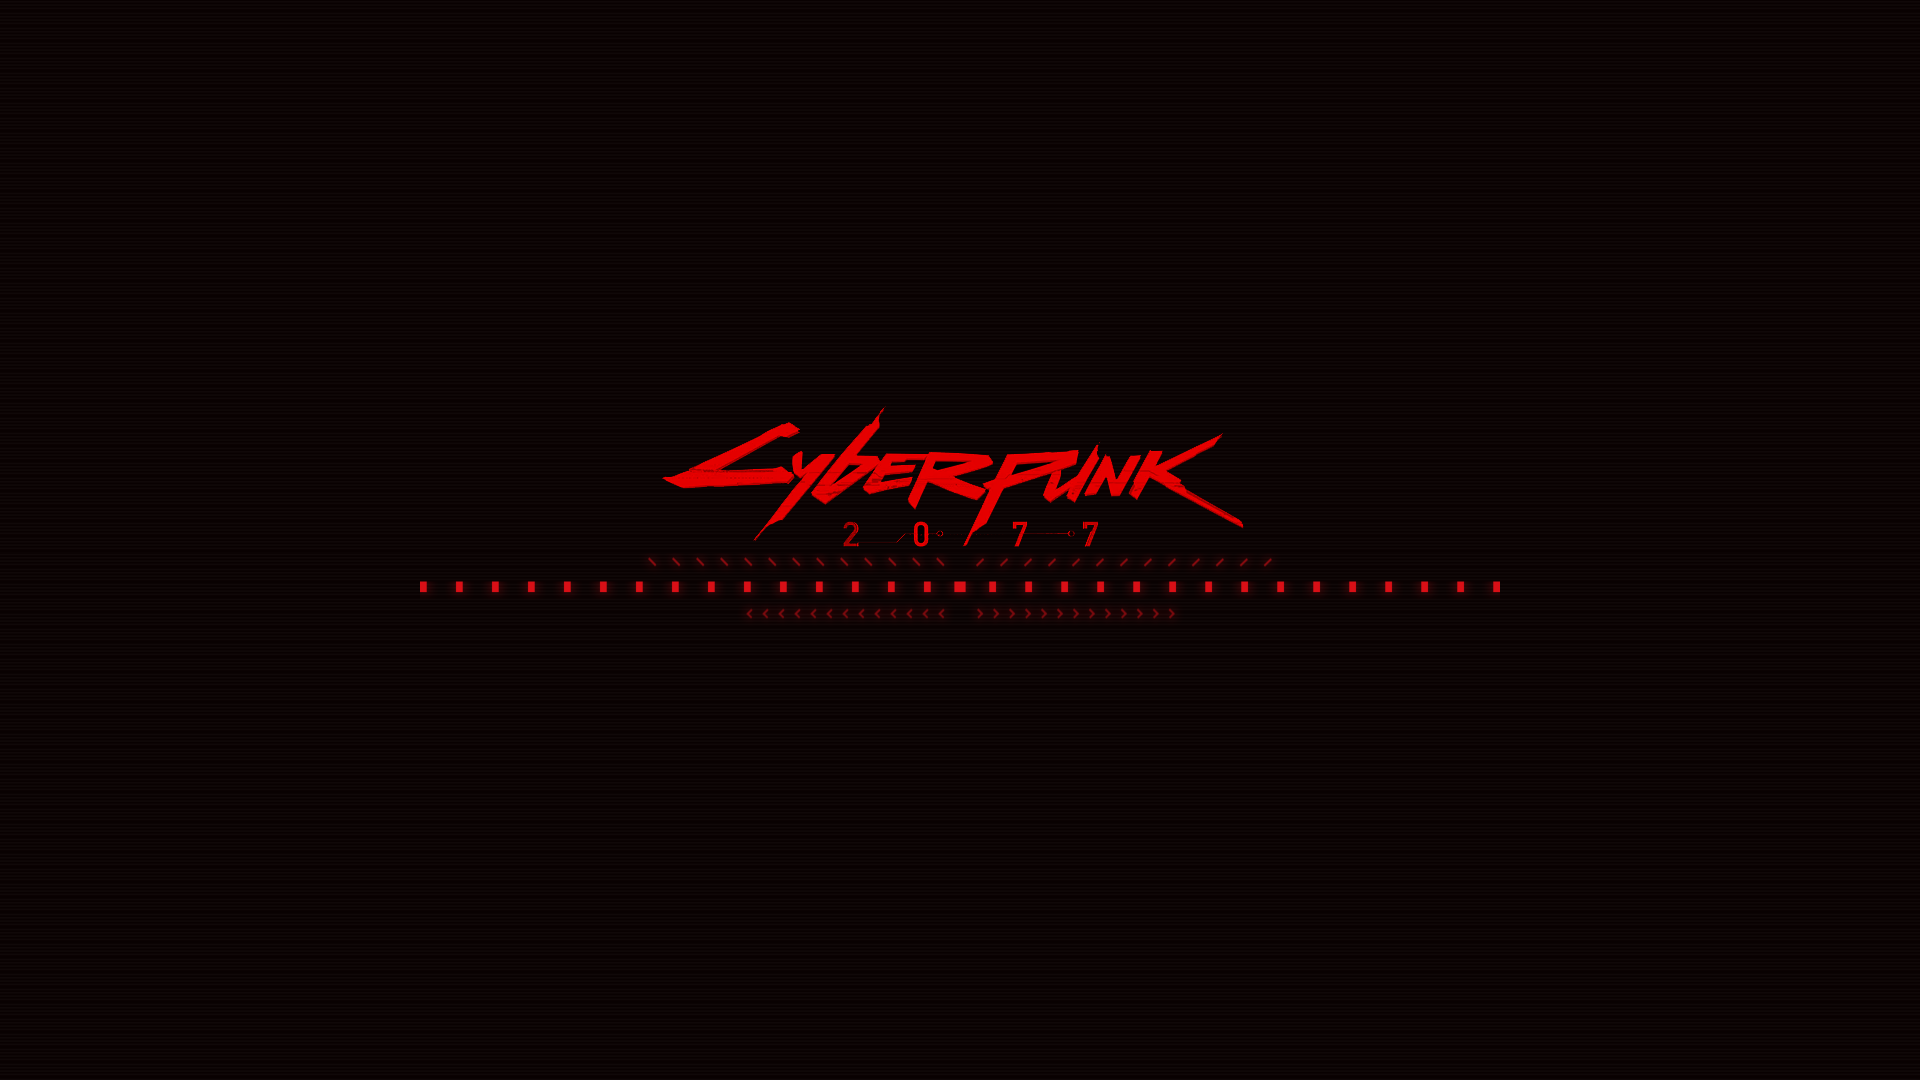 General 1920x1080 Cyberpunk 2077 cyberpunk CD Projekt RED video games logo PC gaming dark background simple background black background